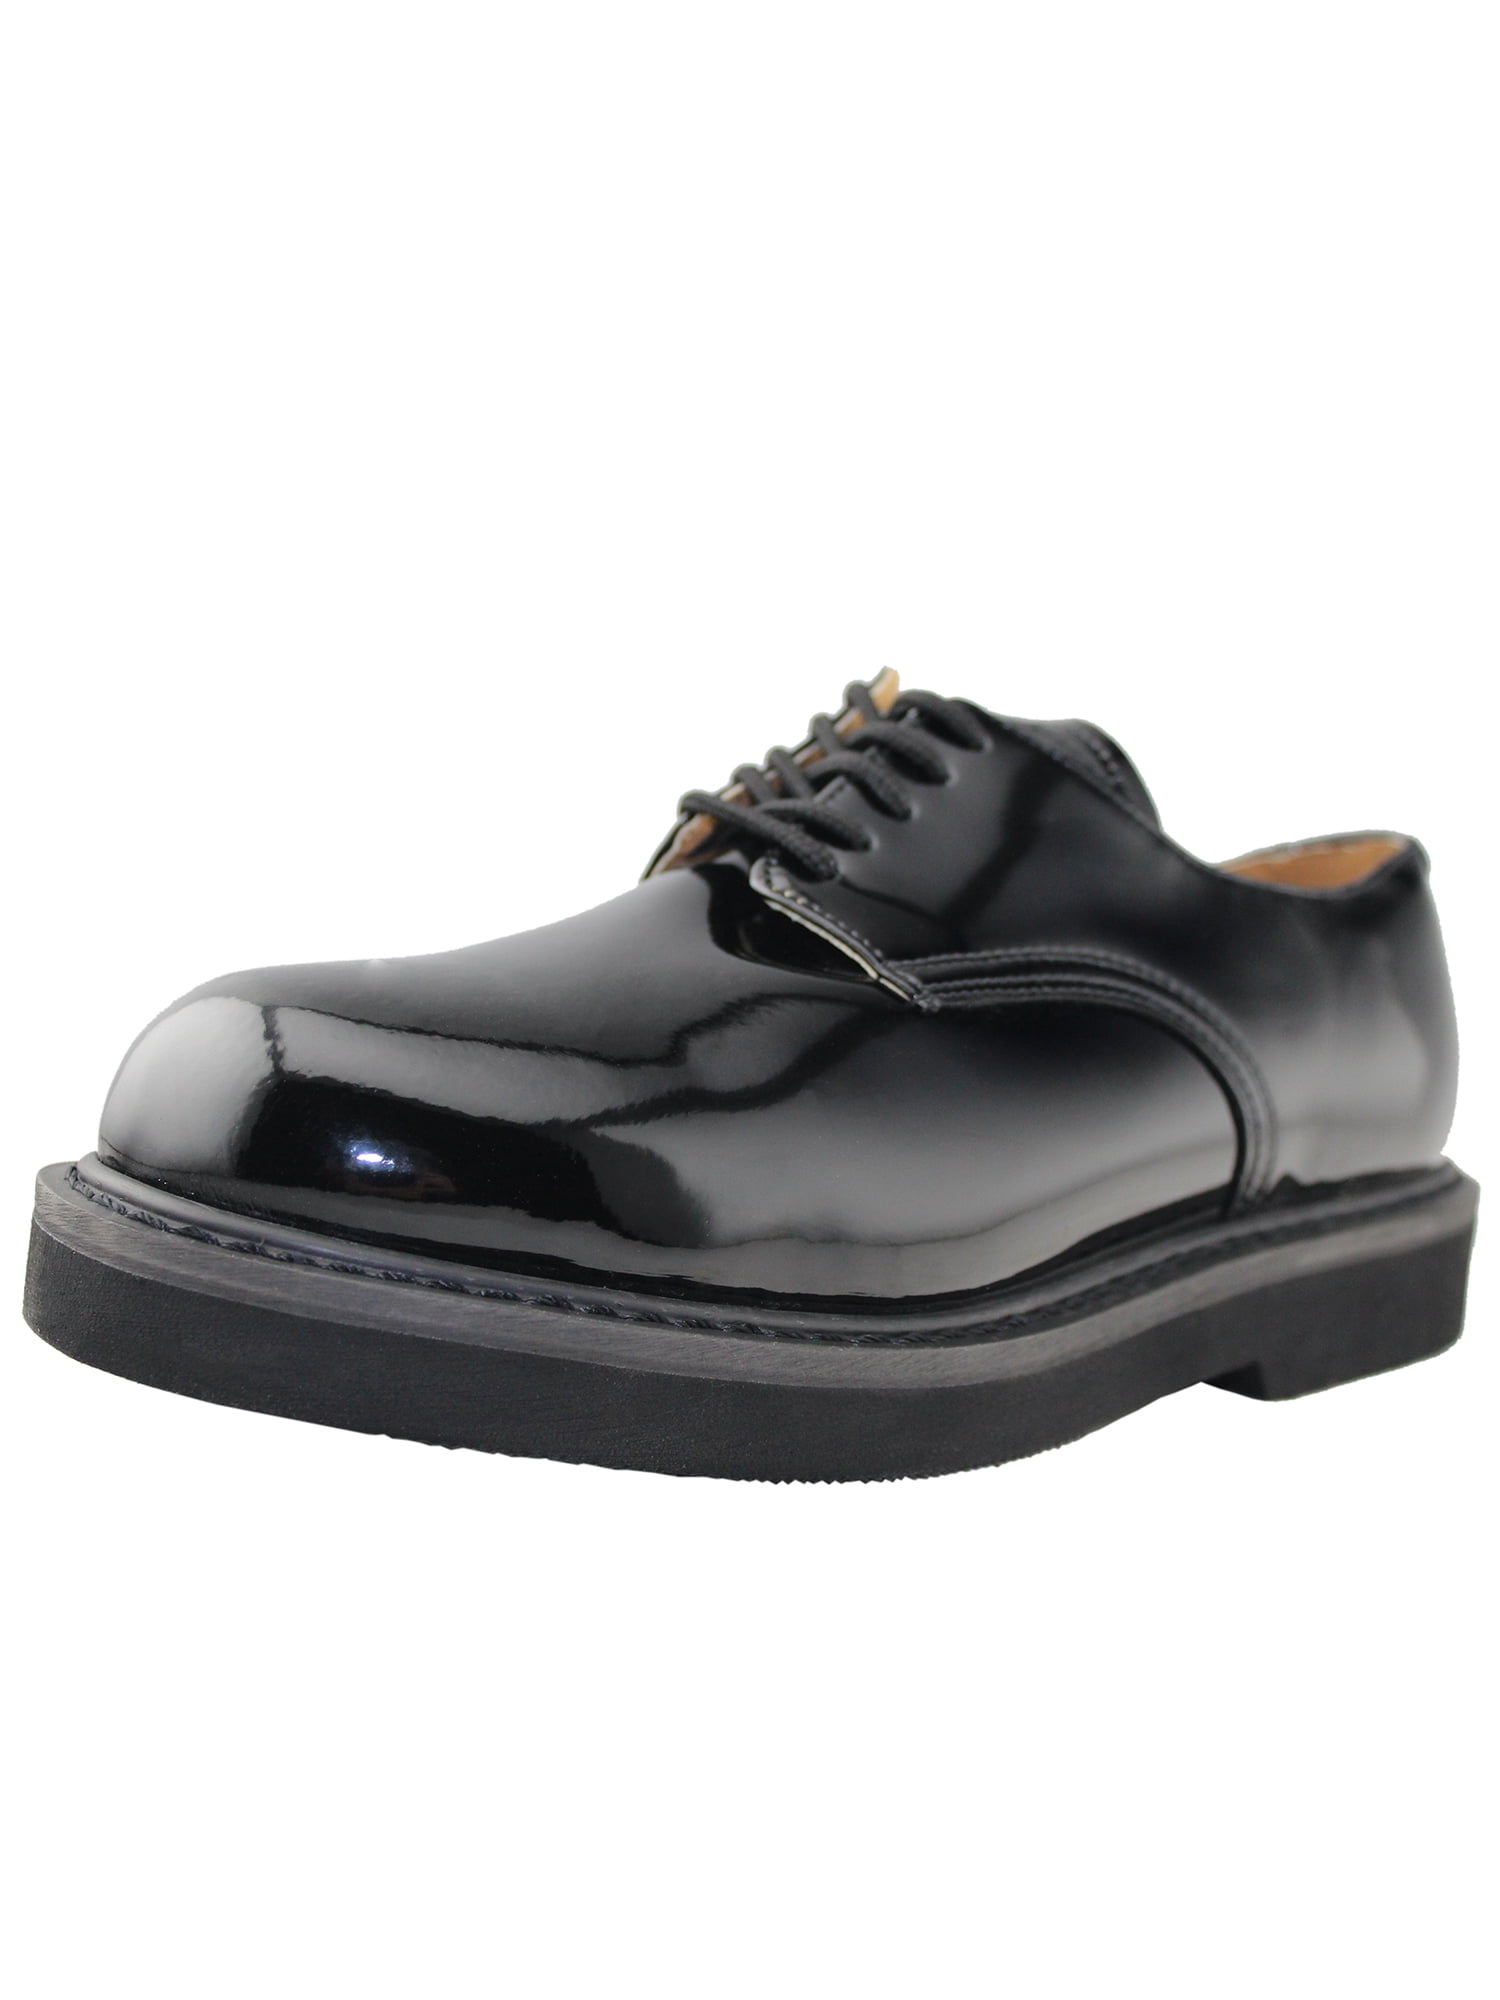 black dress shoes mens walmart